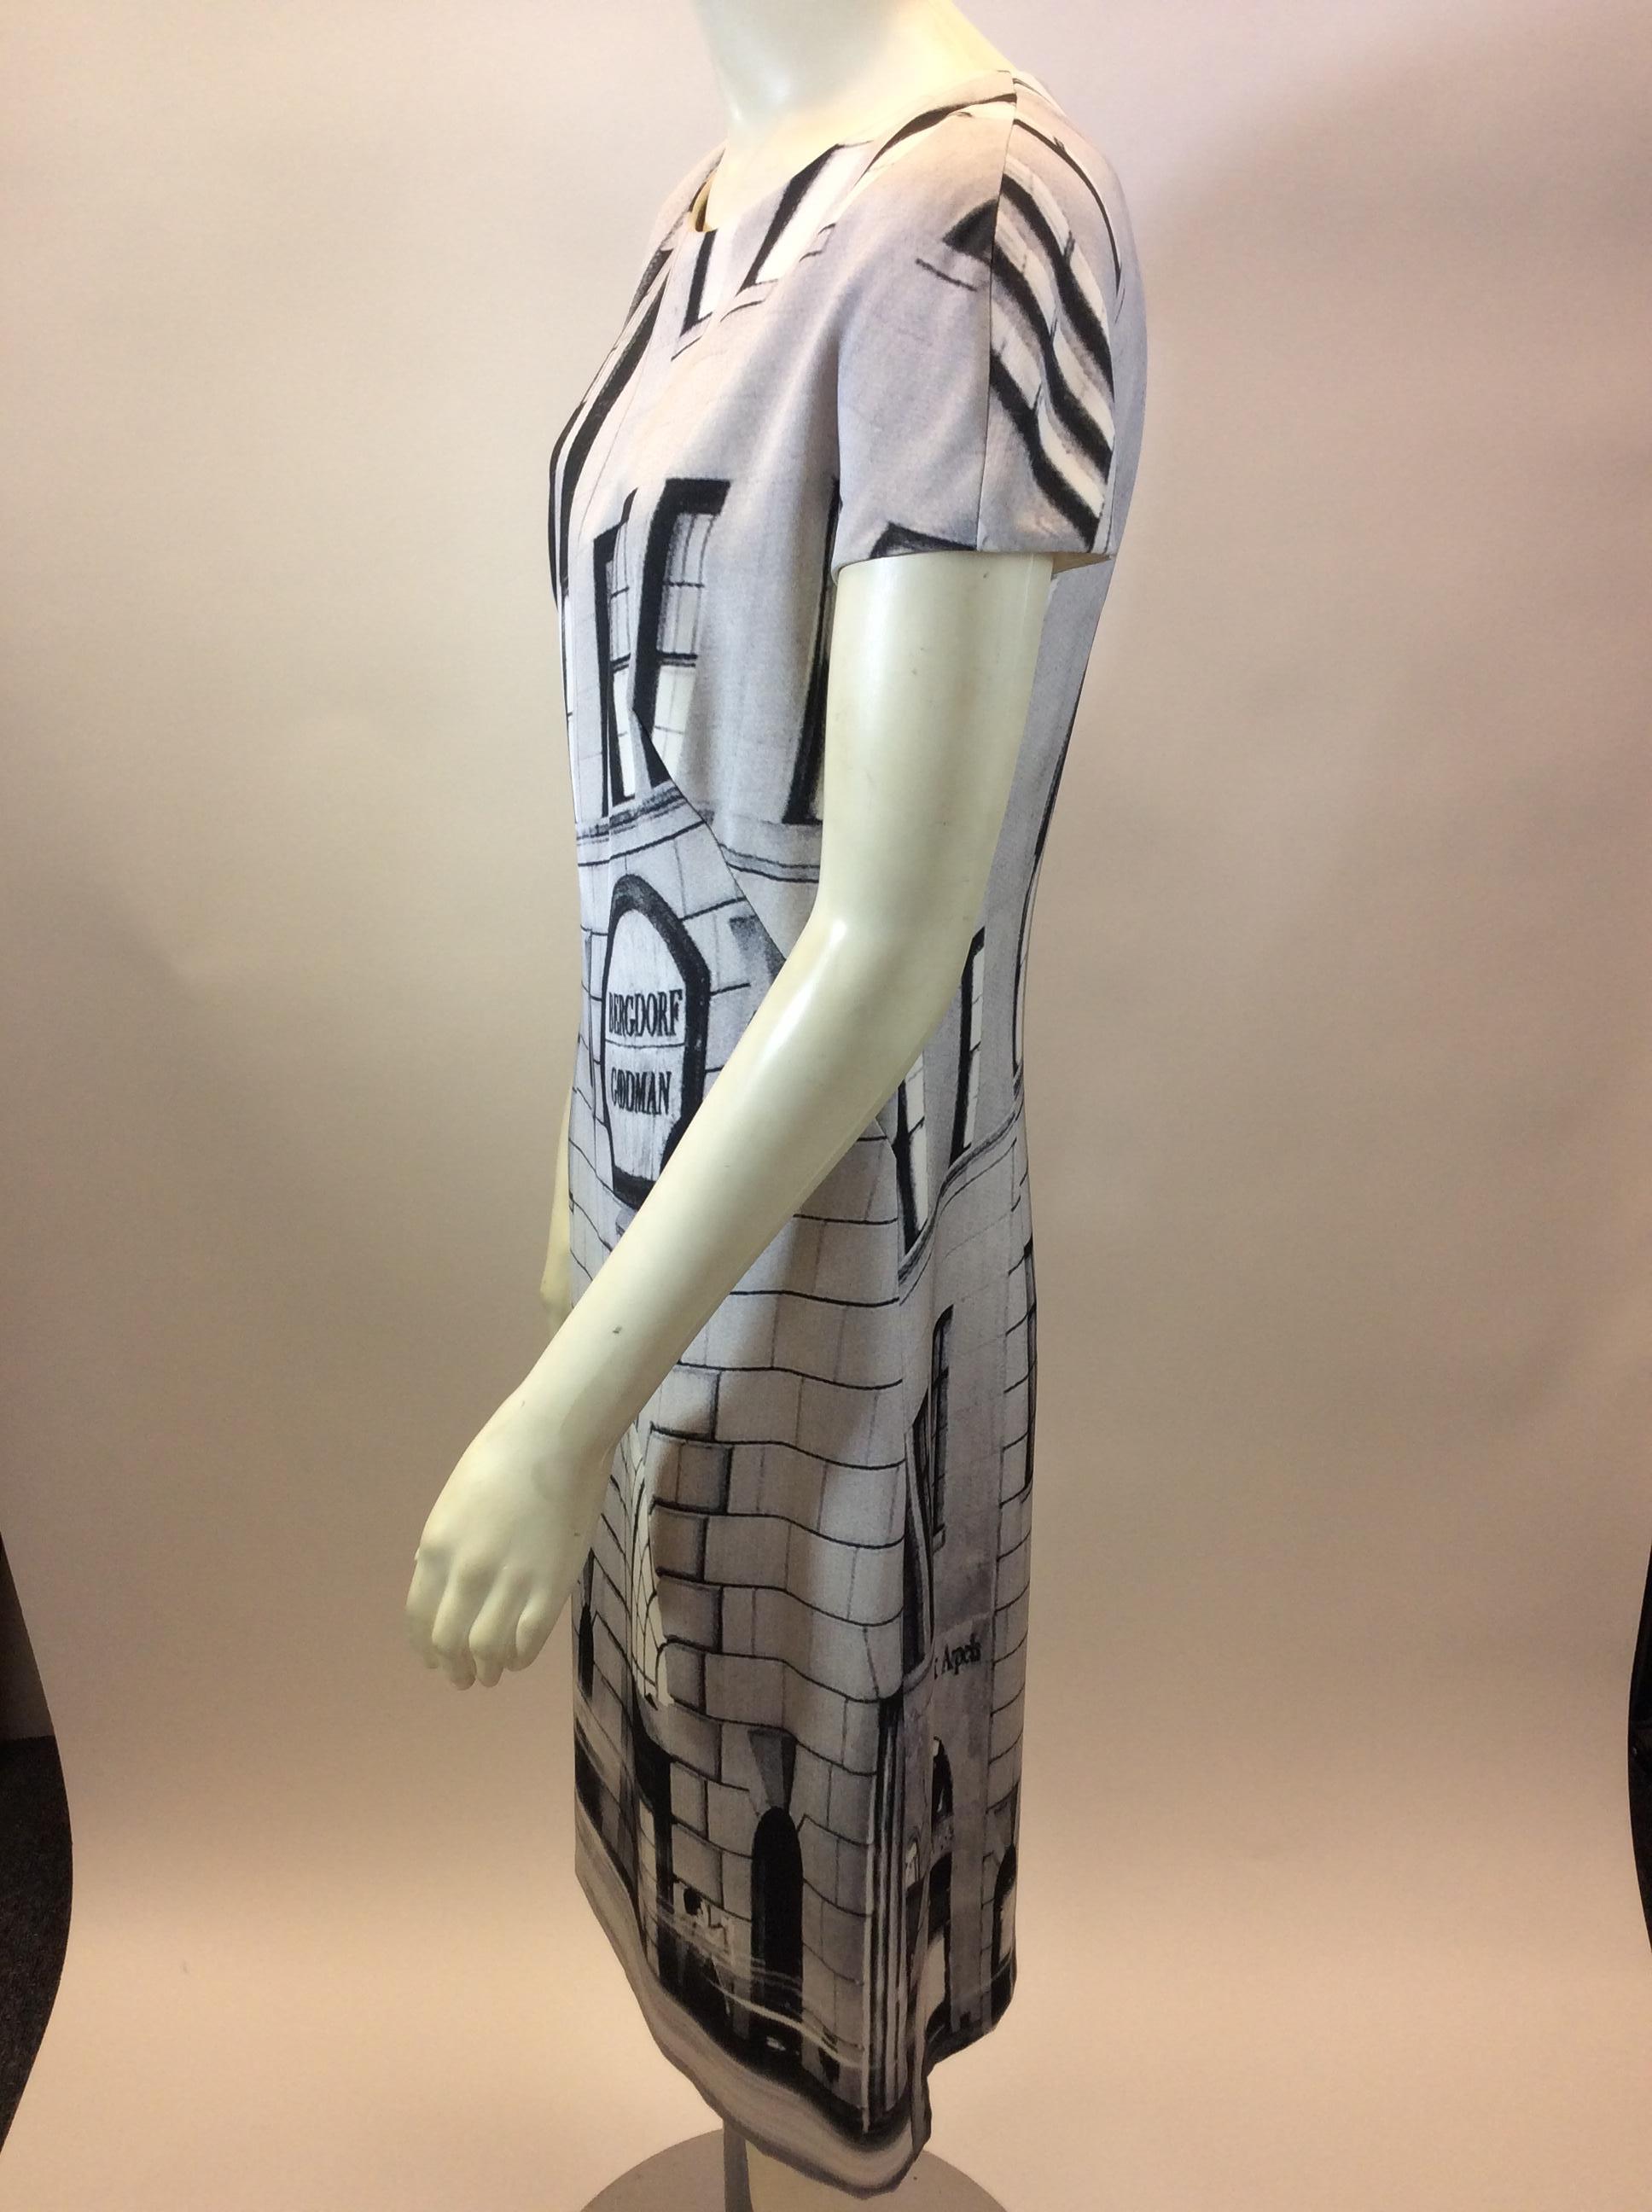 Akris Limited Edition Bergdorf Goodman Silk Dress
$250
100% Silk
Size 12
Length 41